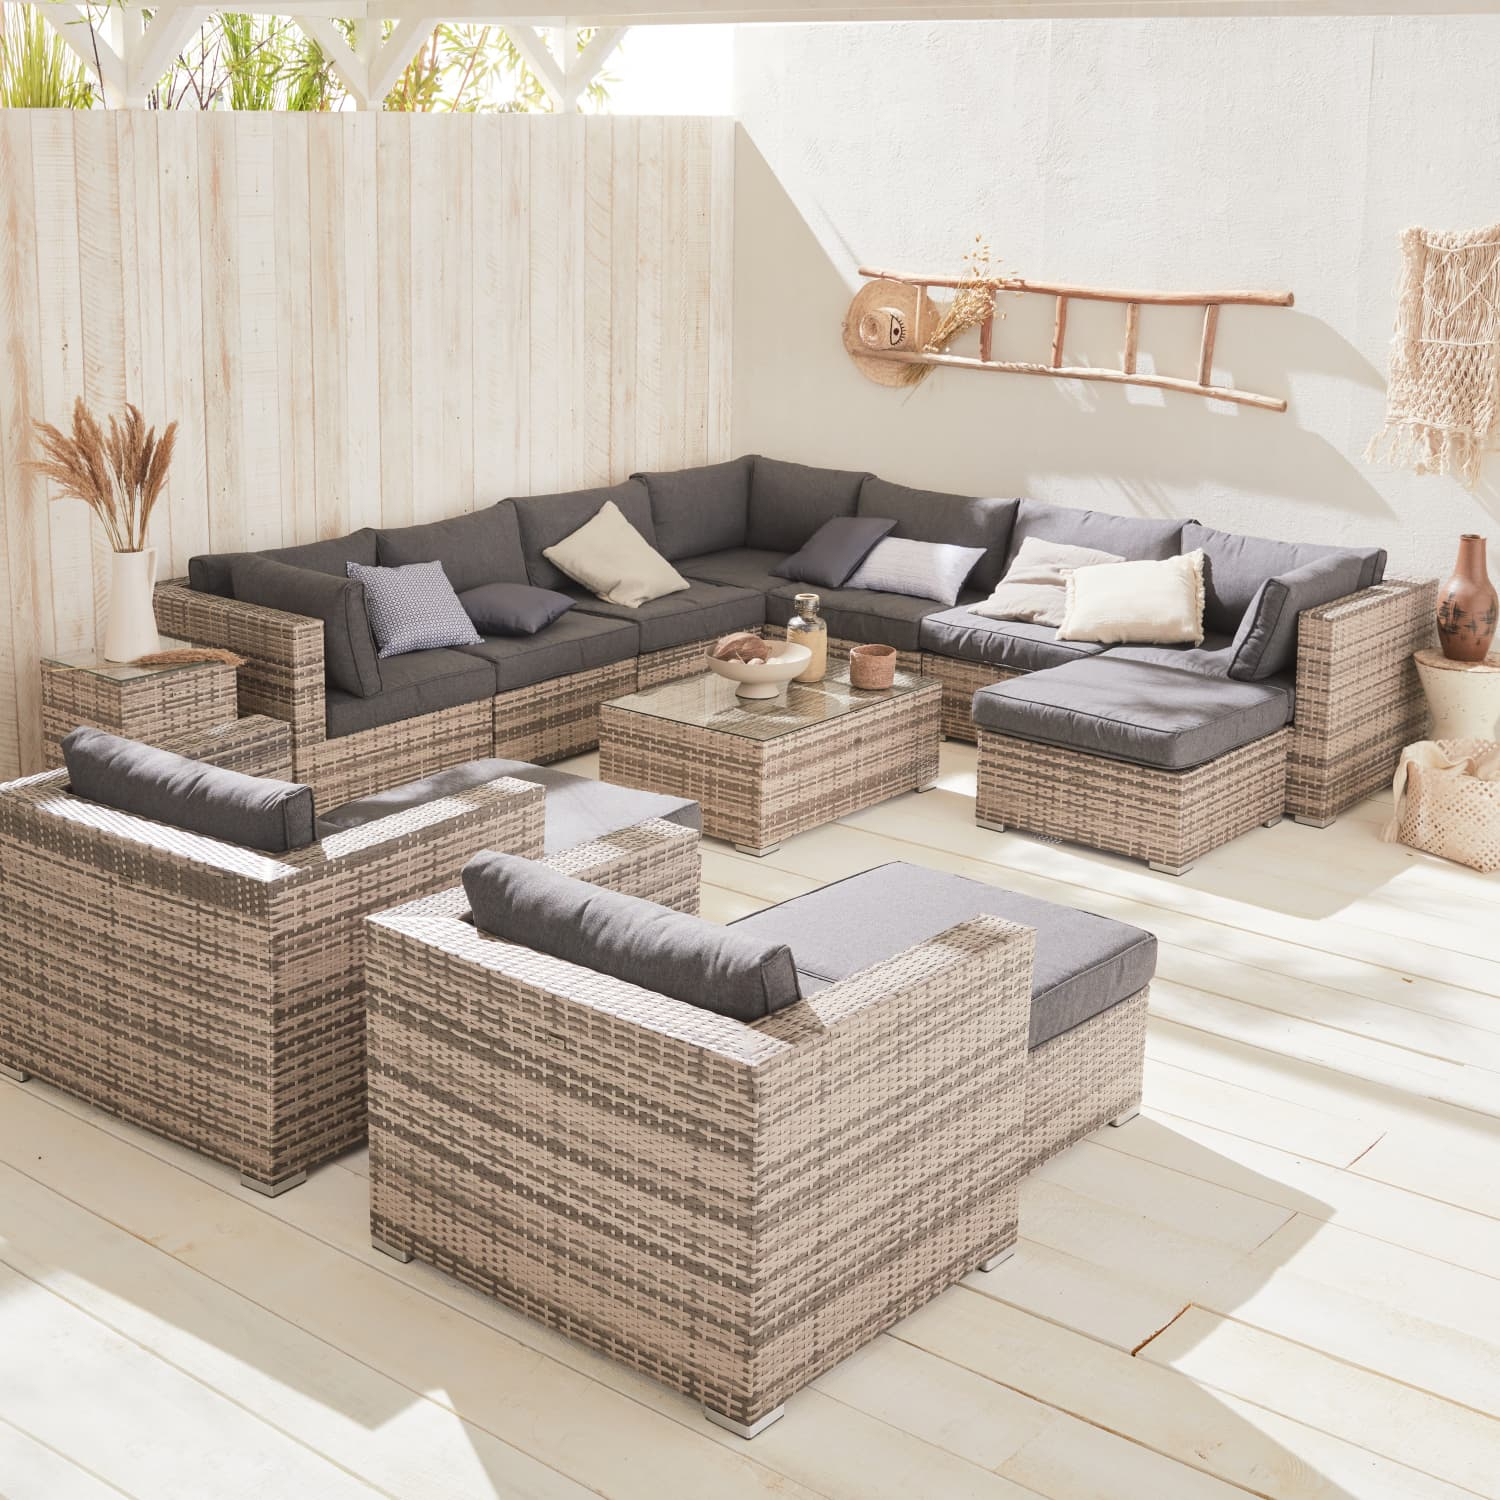 13-14 seater rattan garden sofa set – Tripoli mixed grey